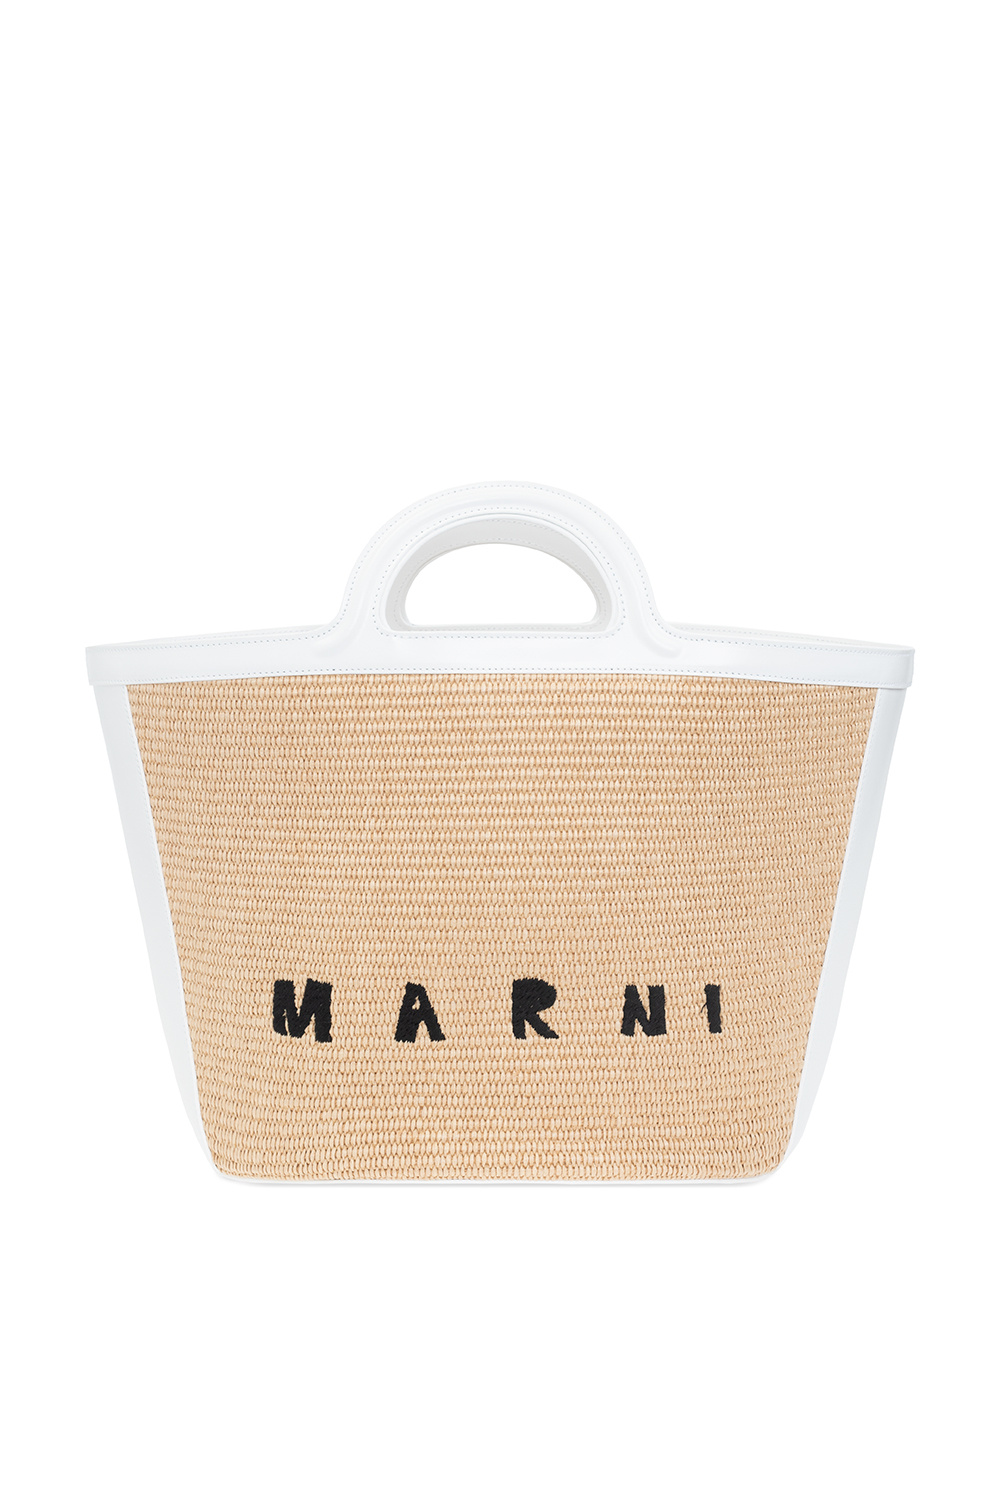 Marni ‘Tropicalia Summer Large’ handbag